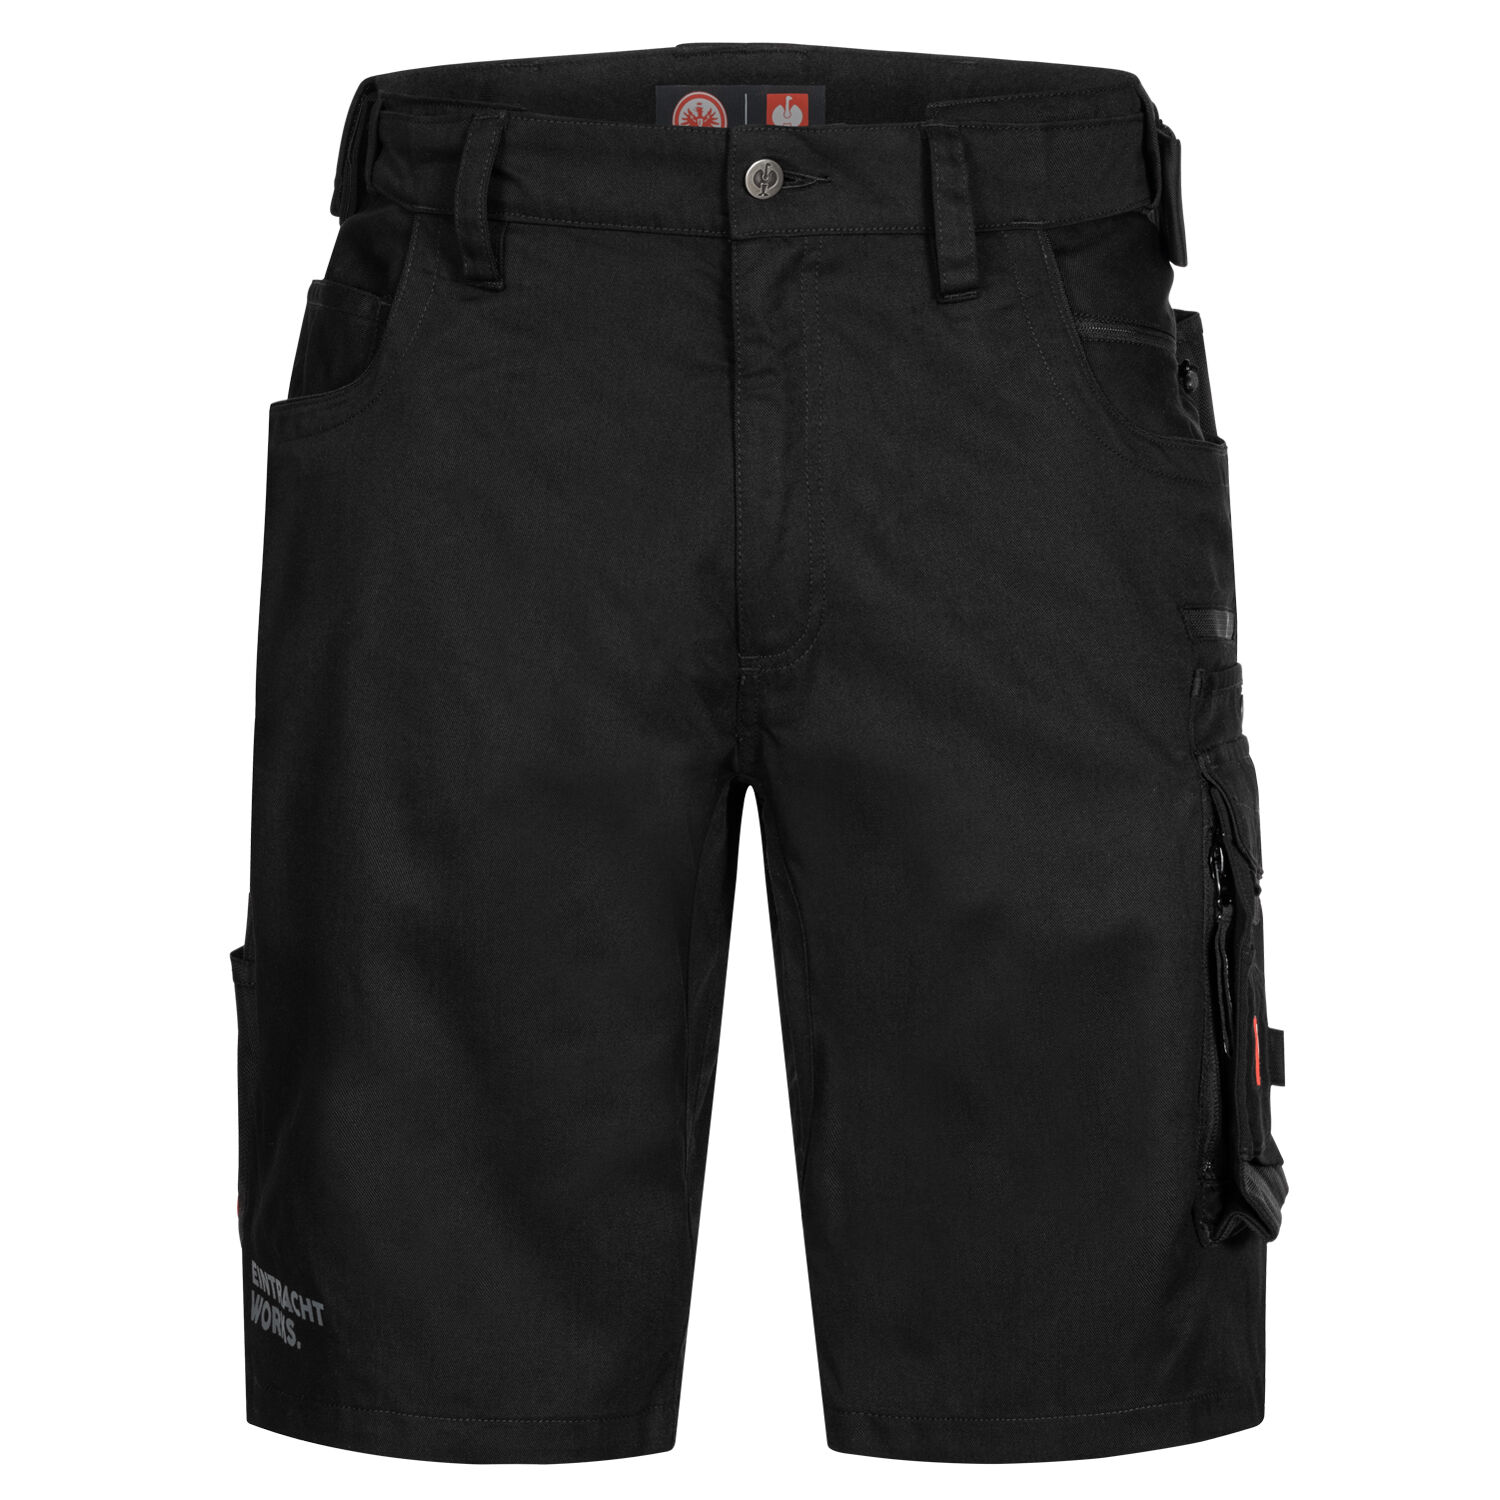 Bild 1: Workwear Pants Short Black